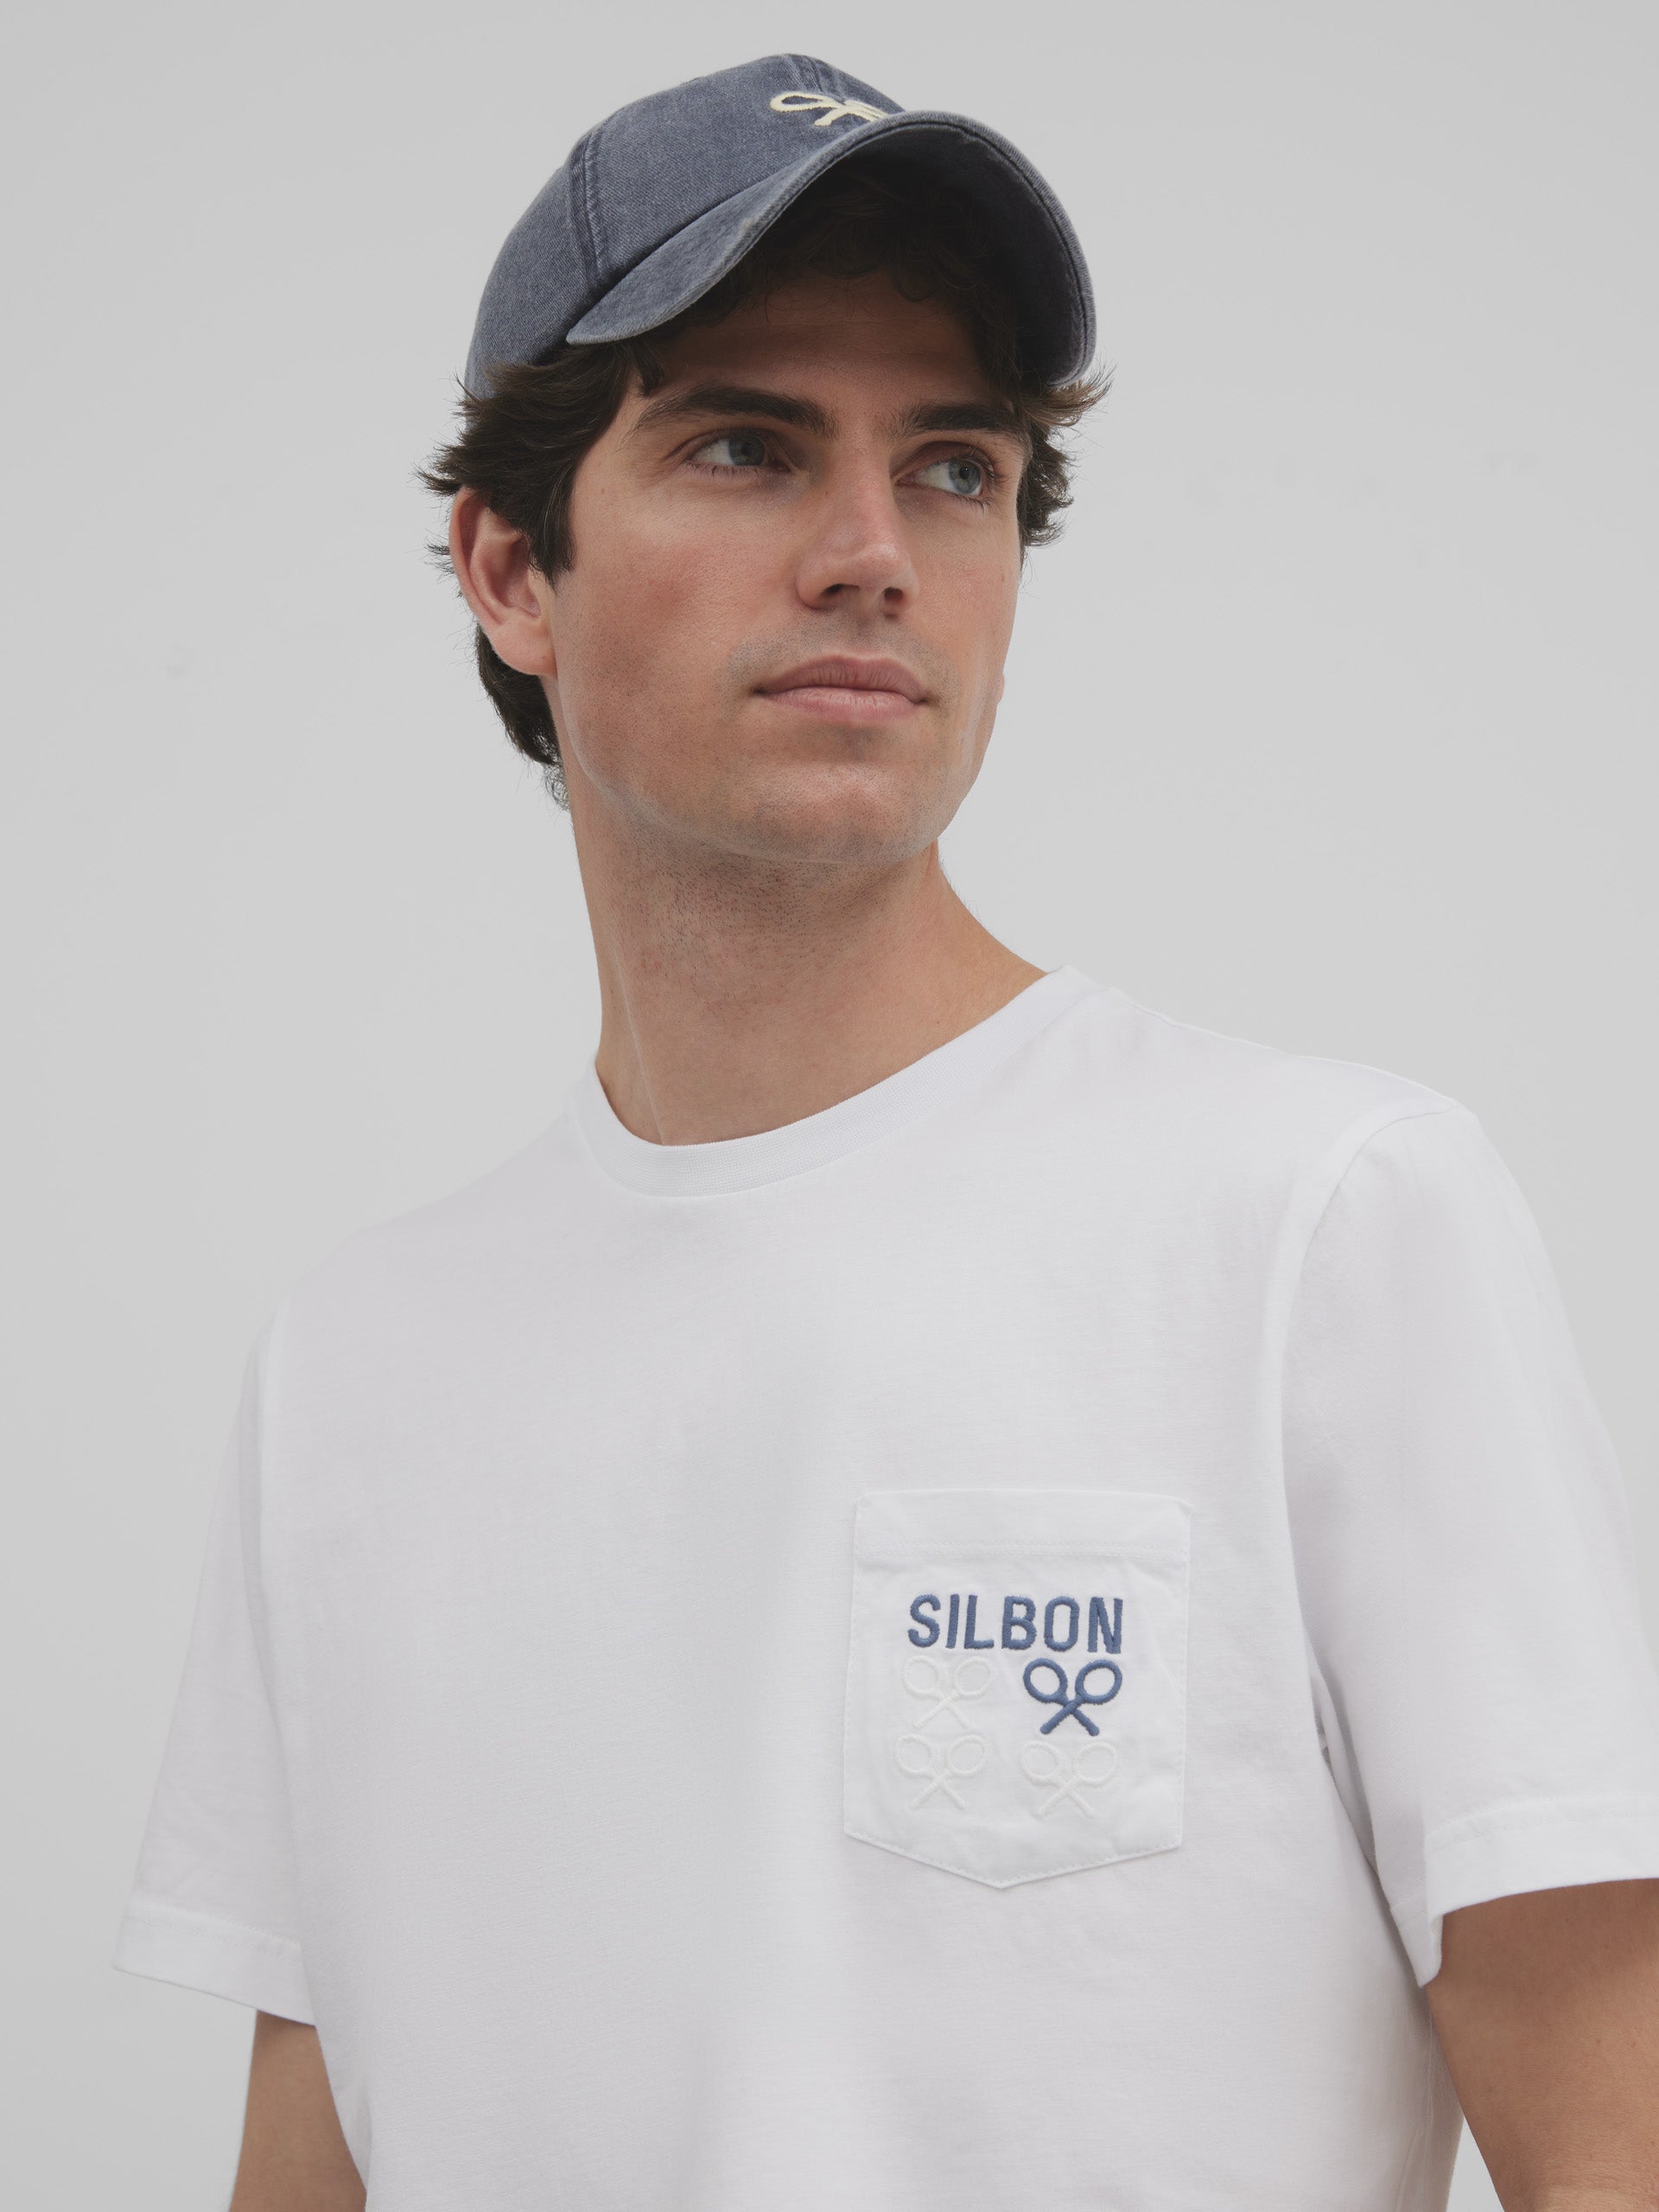 Silbon t-shirt with white mini rackets pocket